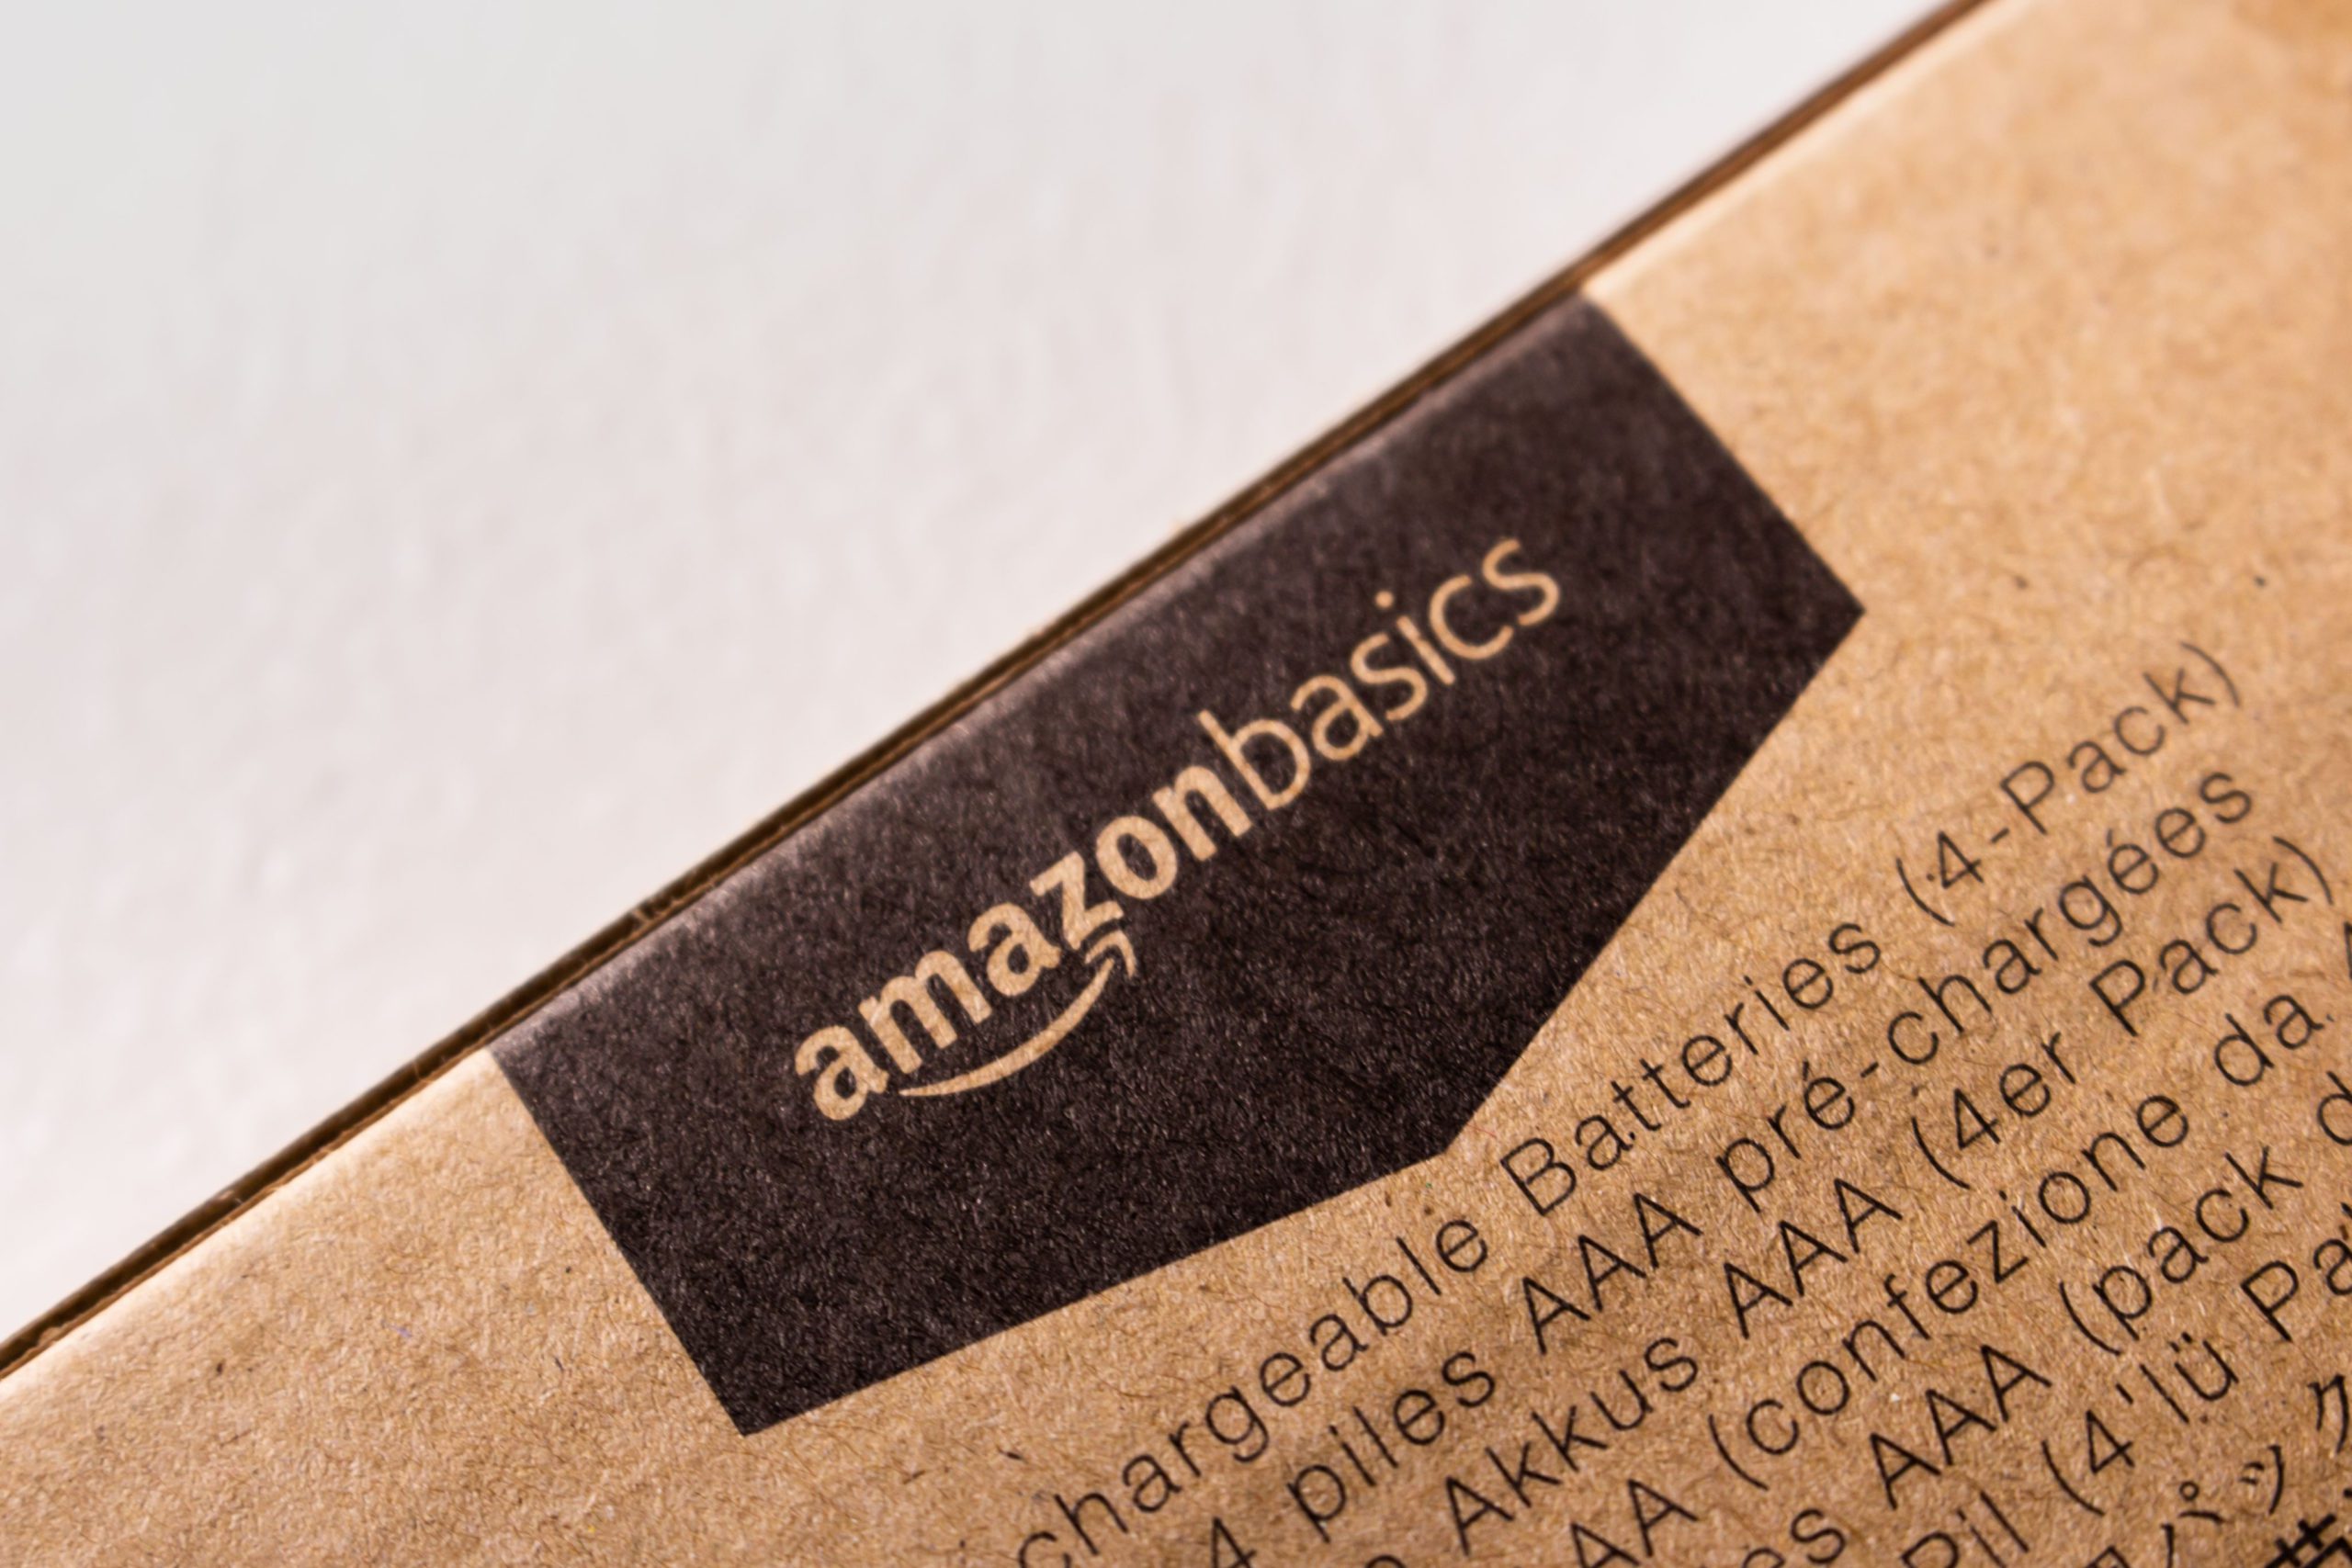 Amazon considers ending private-label sales to appease regulators - Digital Commerce 360